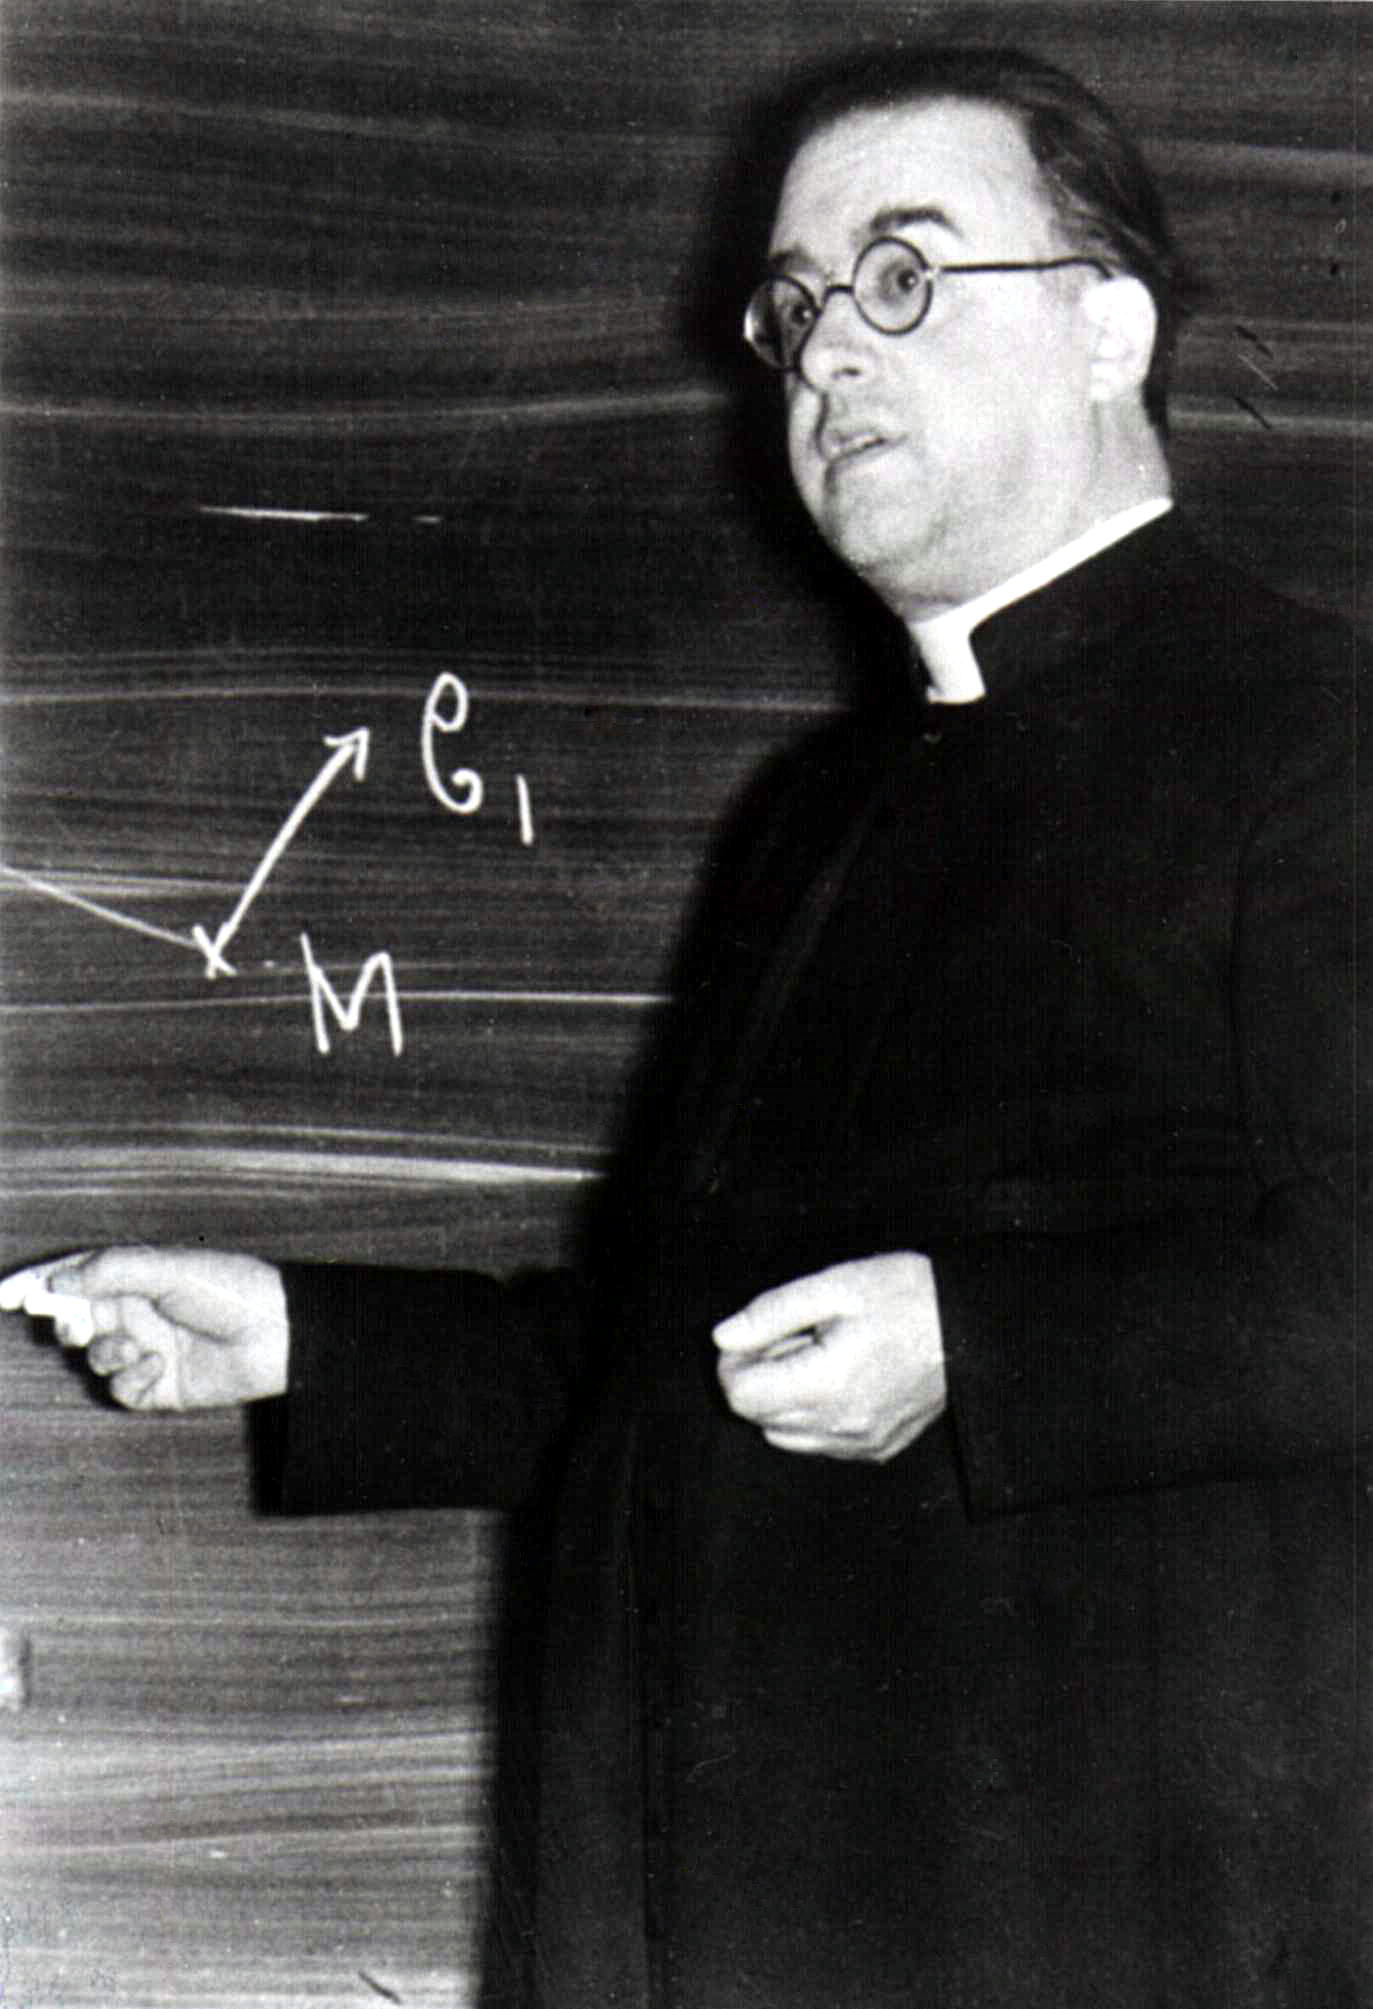 Big Bang a fost invenţia unui preot catolic